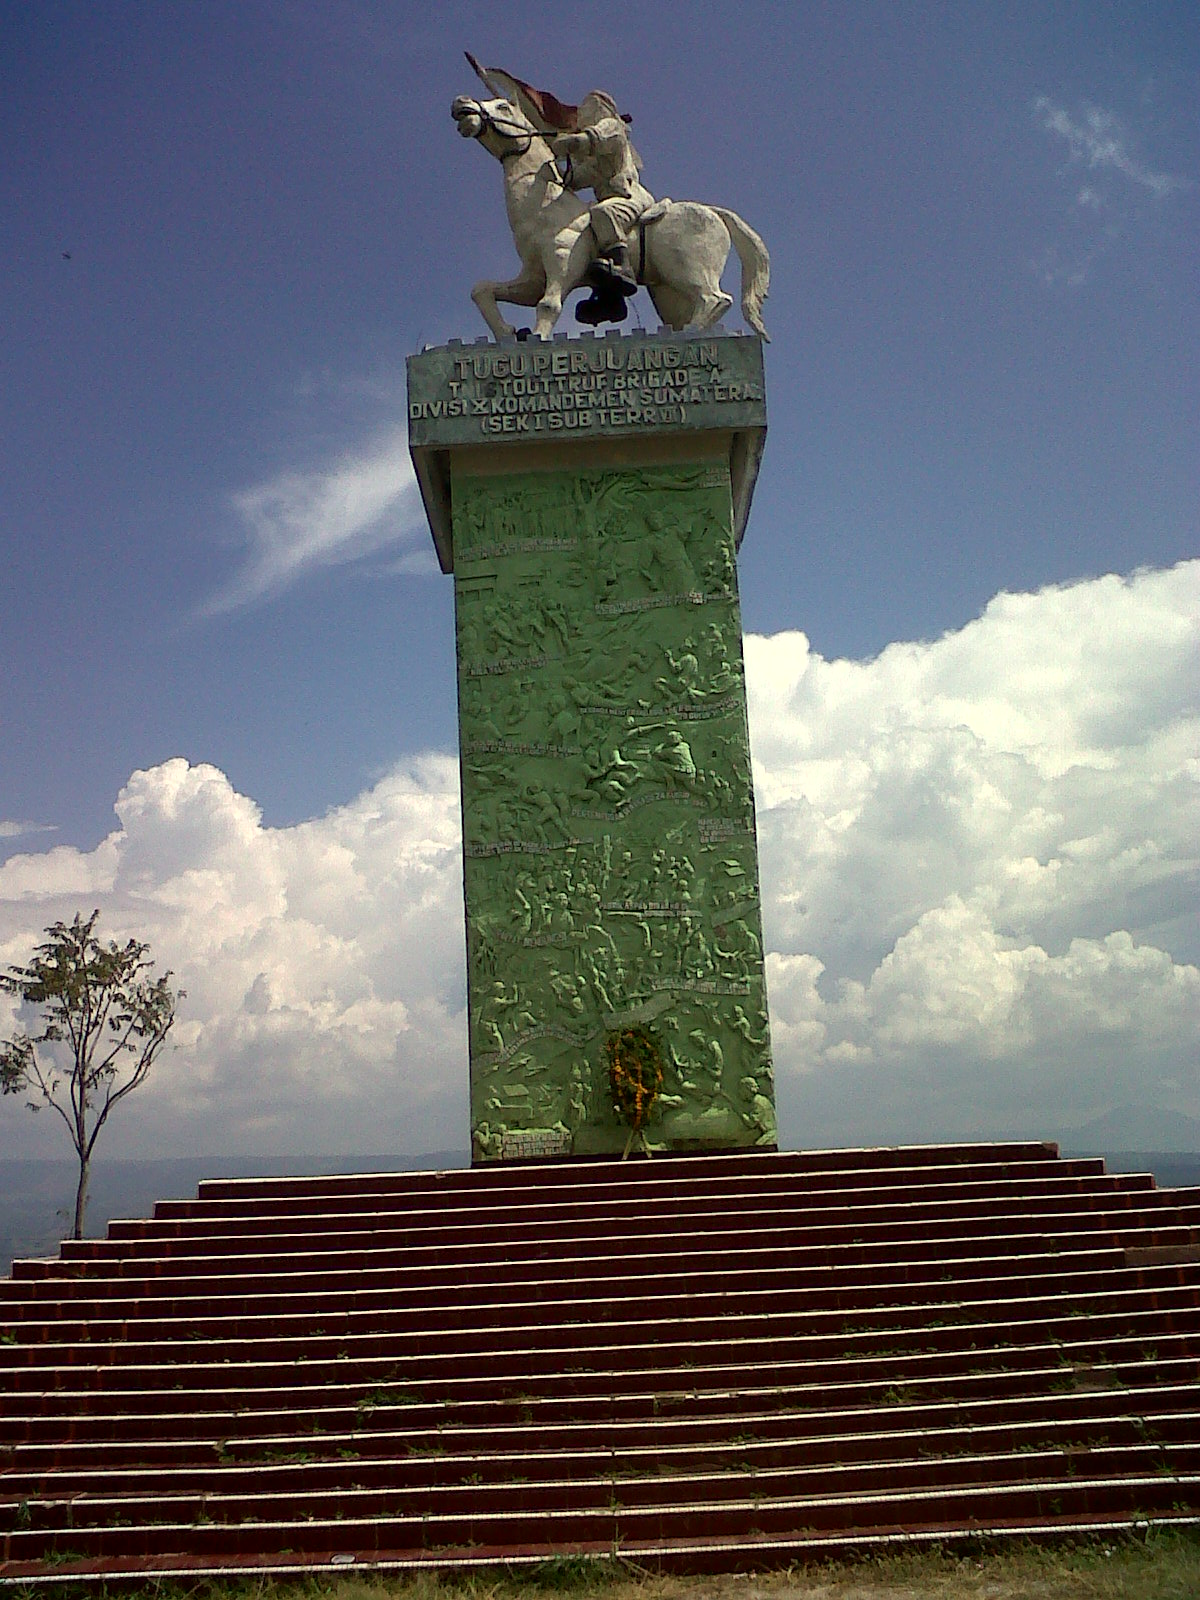 Download this Tugu Monumen Perjuangan Rakyat Tigaras picture